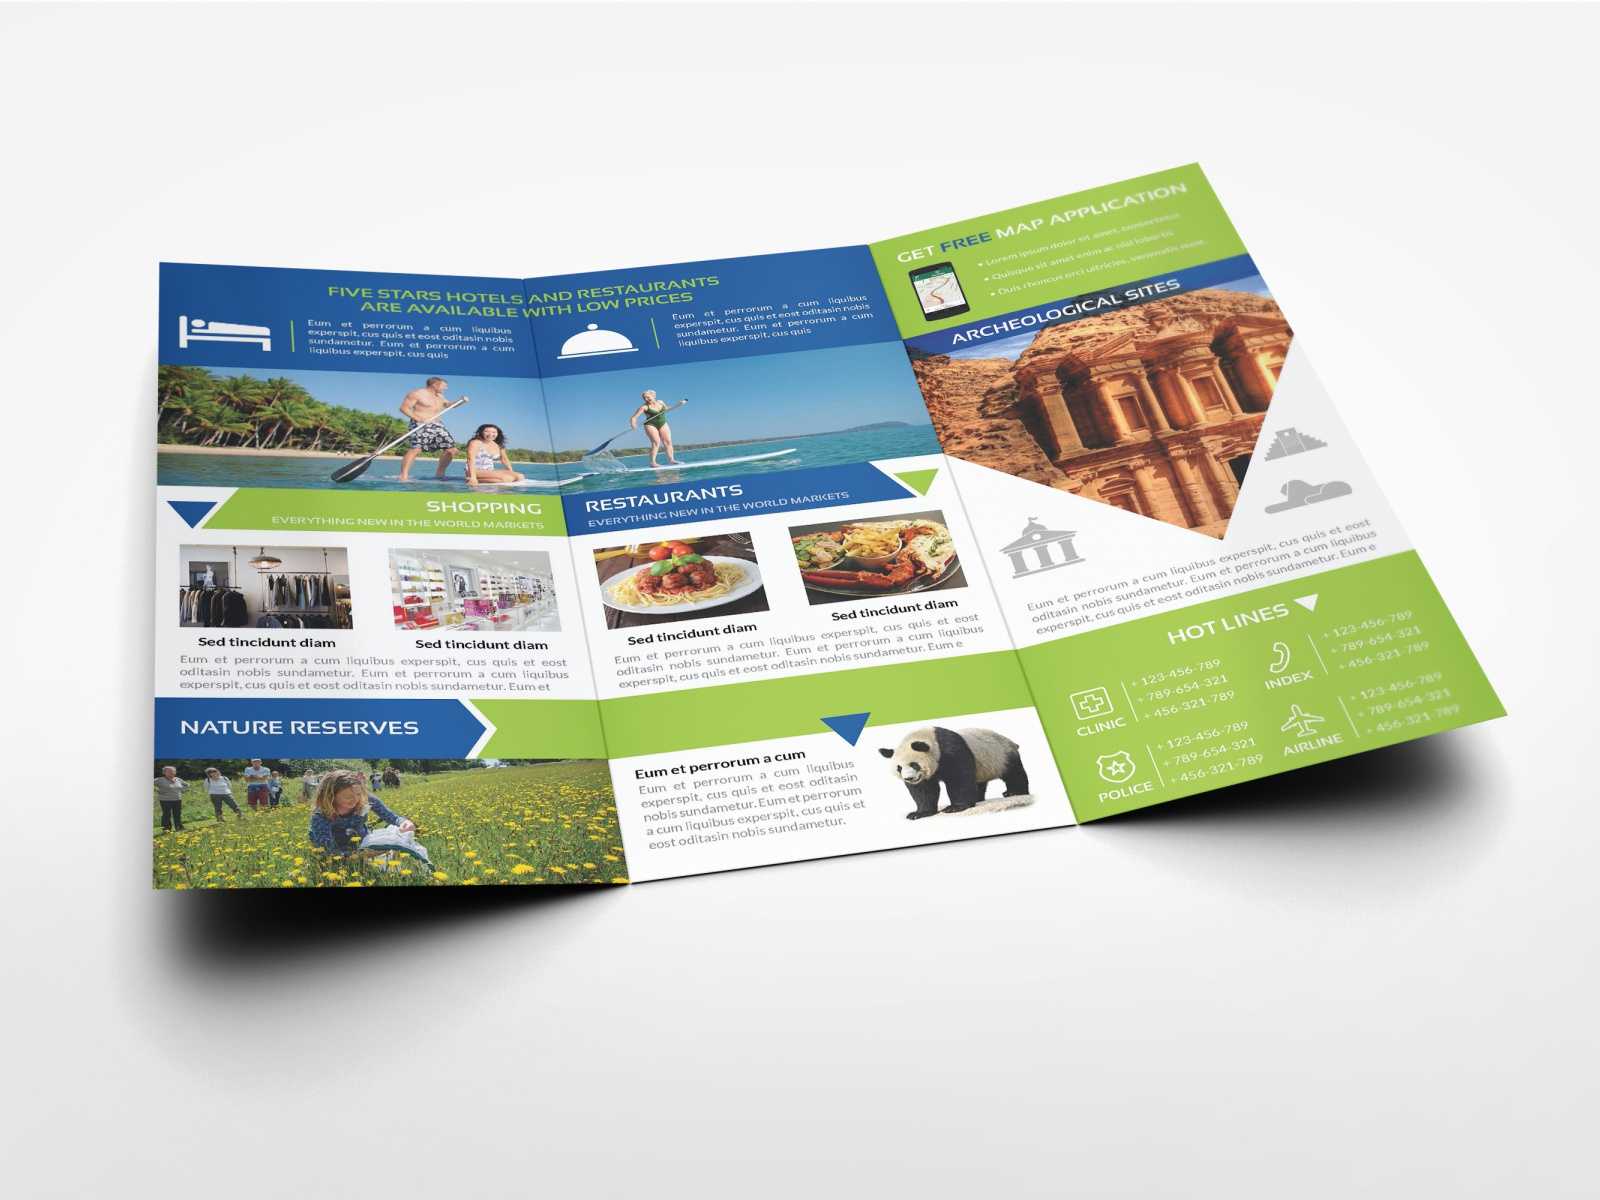 Travel Guide Tri Fold Brochure Templateowpictures On With Travel Guide Brochure Template